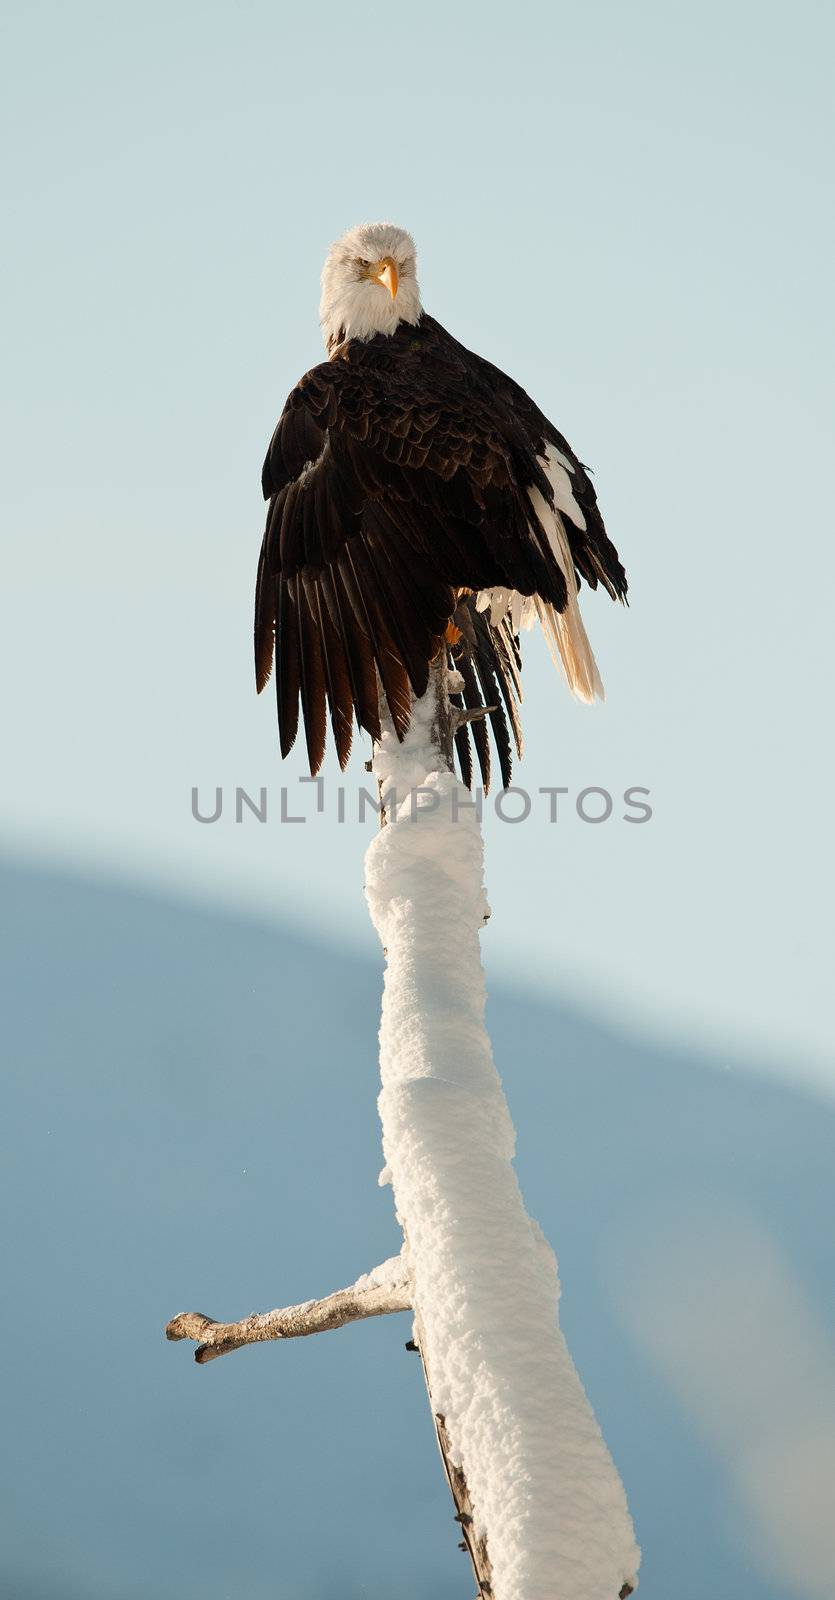 The Bald Eagle (Haliaeetus leucocephalus)  by SURZ